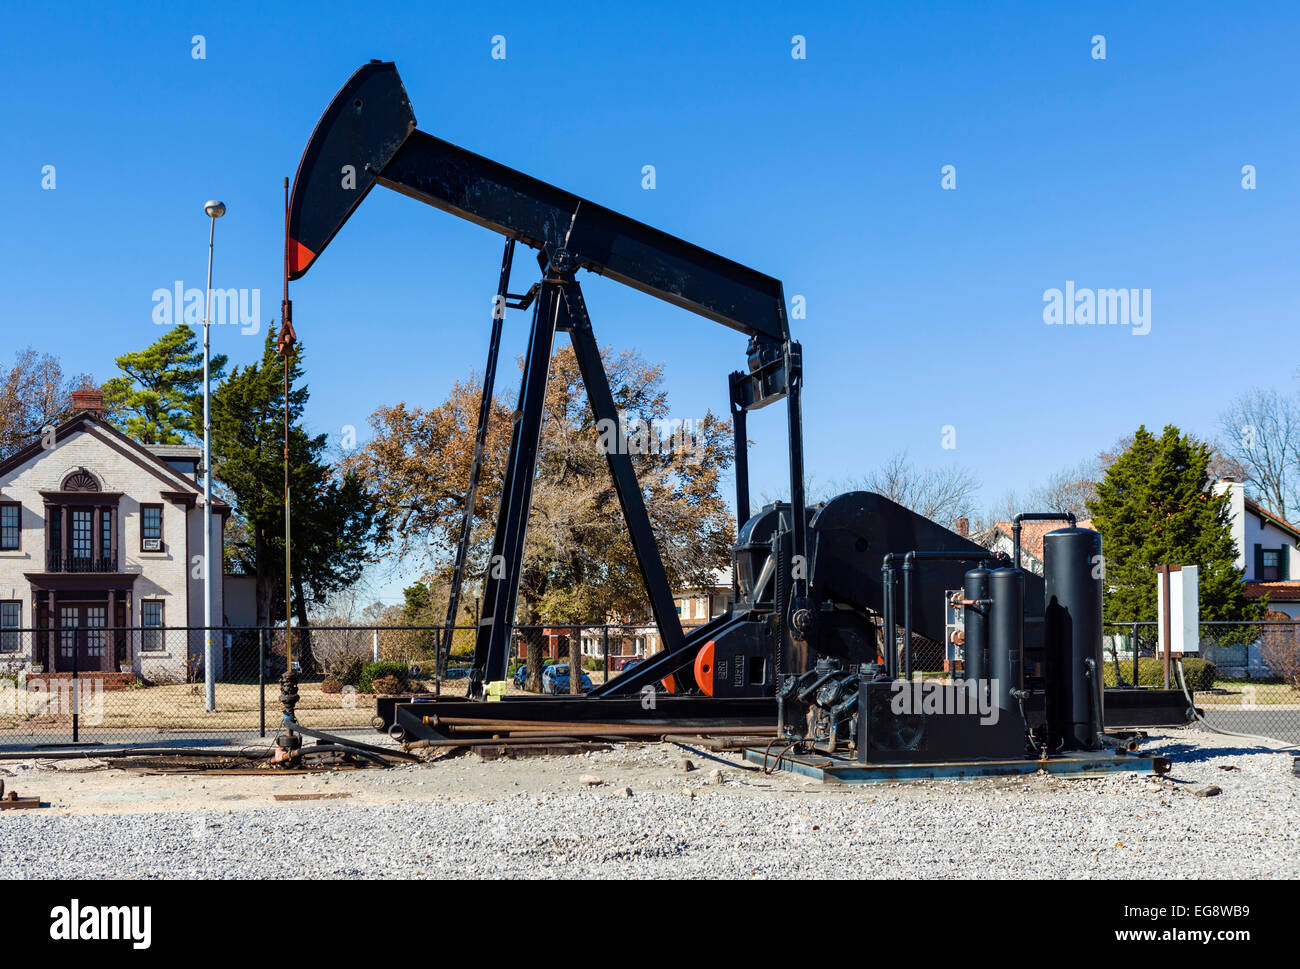 Oil well in an urban environment, N Lincoln Blvd, Oklahoma City, OK, USA Stock Photo